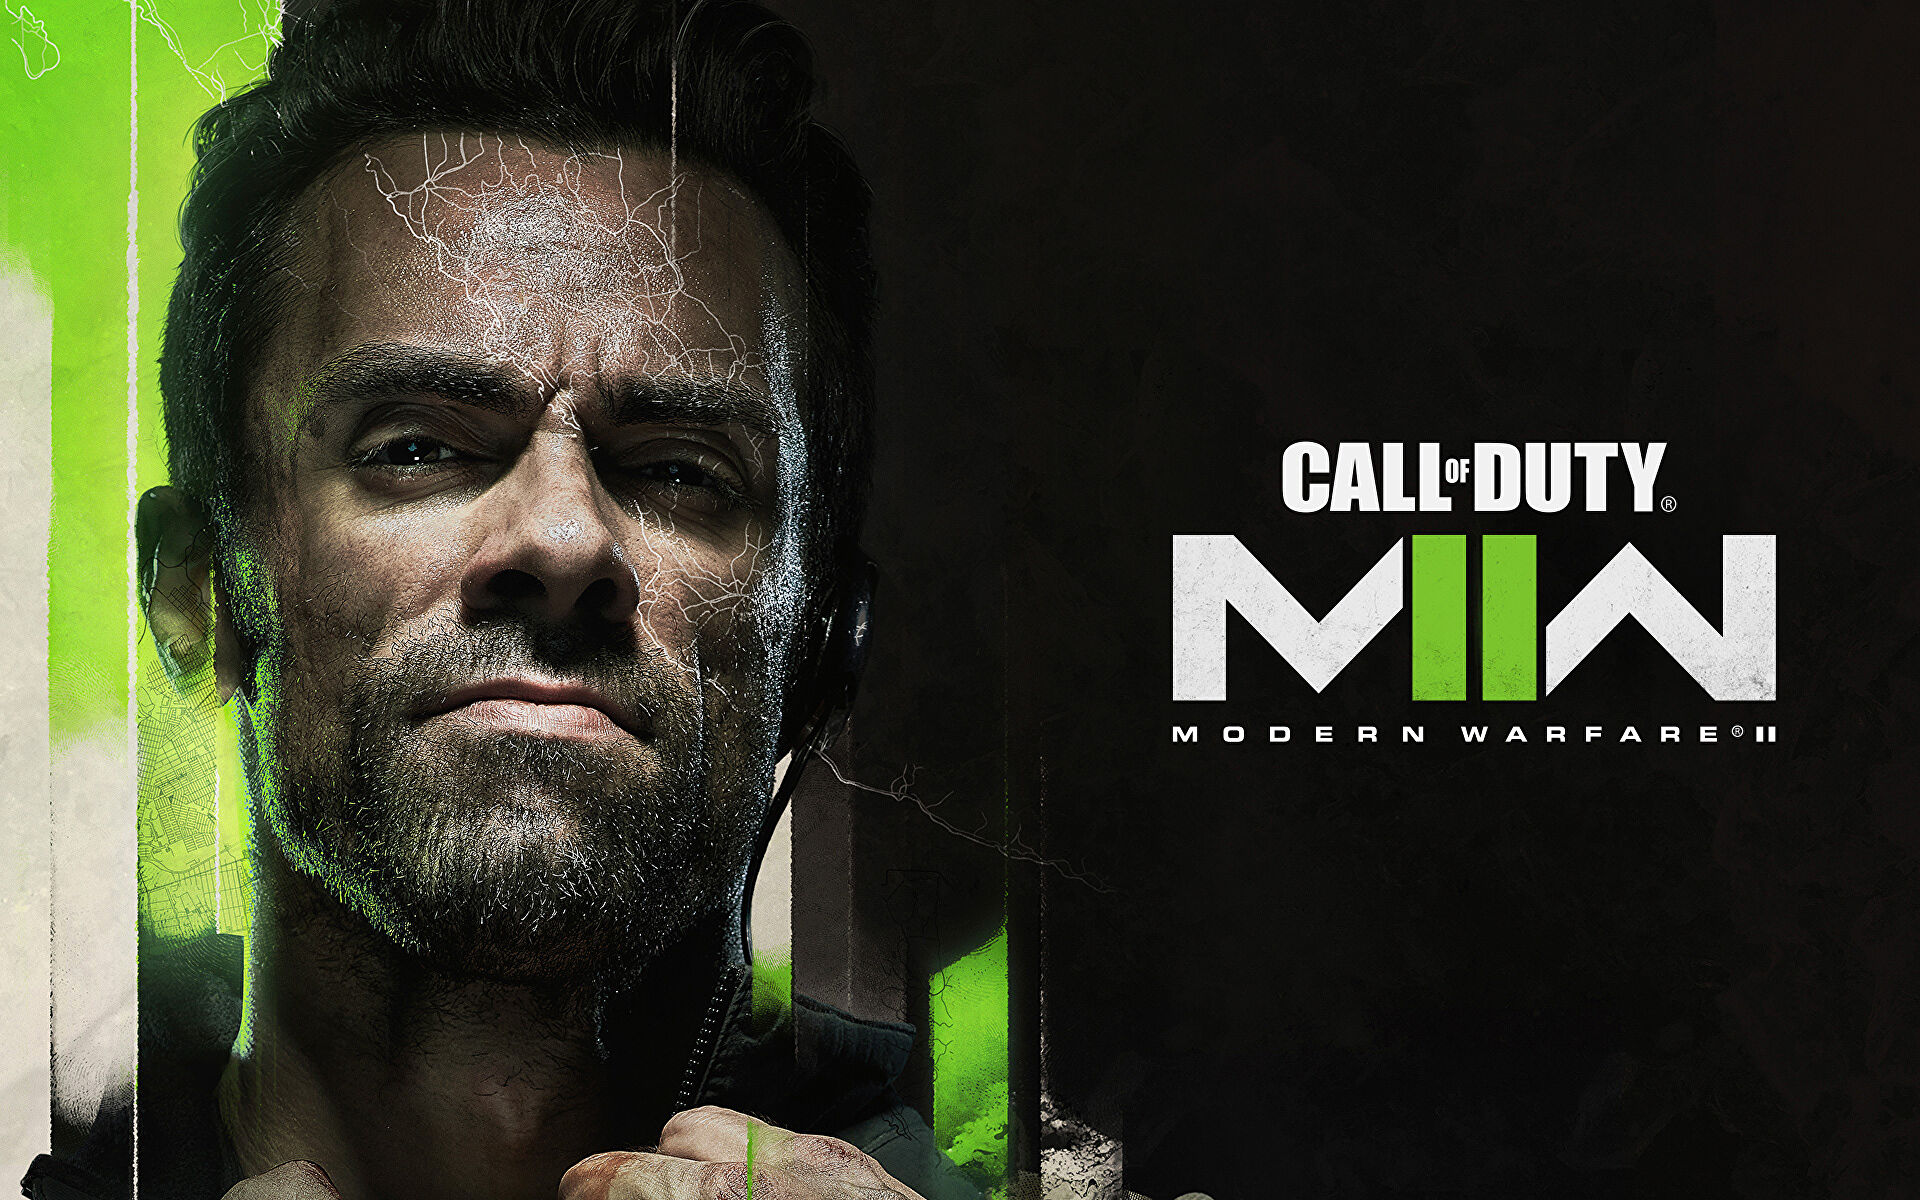 La date de sortie de Call of Duty : Modern Warfare 2 est fixée au 28 octobre